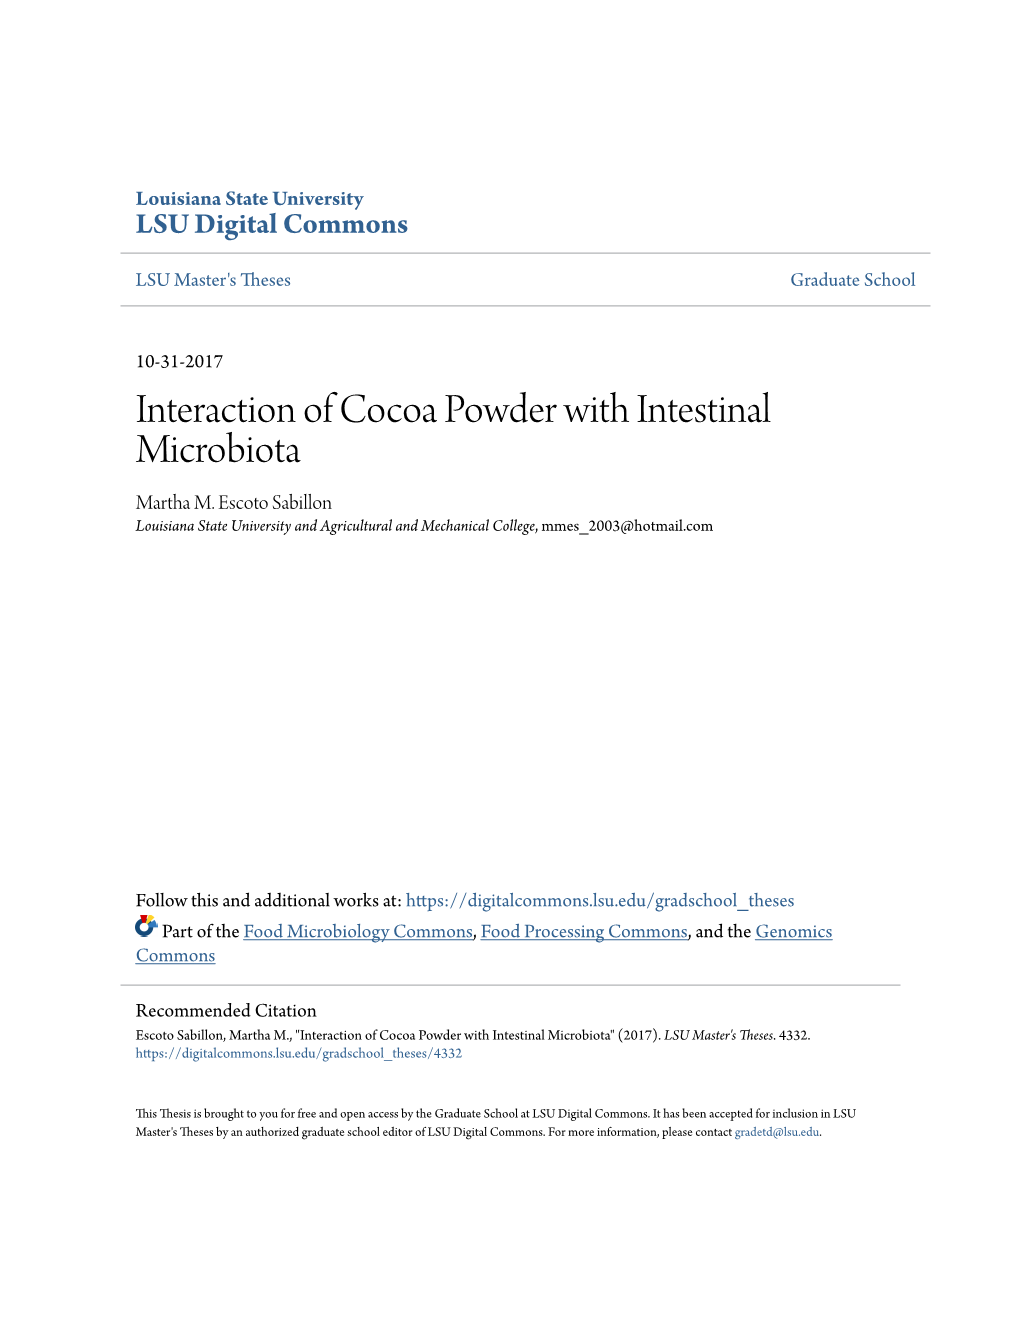 Interaction of Cocoa Powder with Intestinal Microbiota Martha M